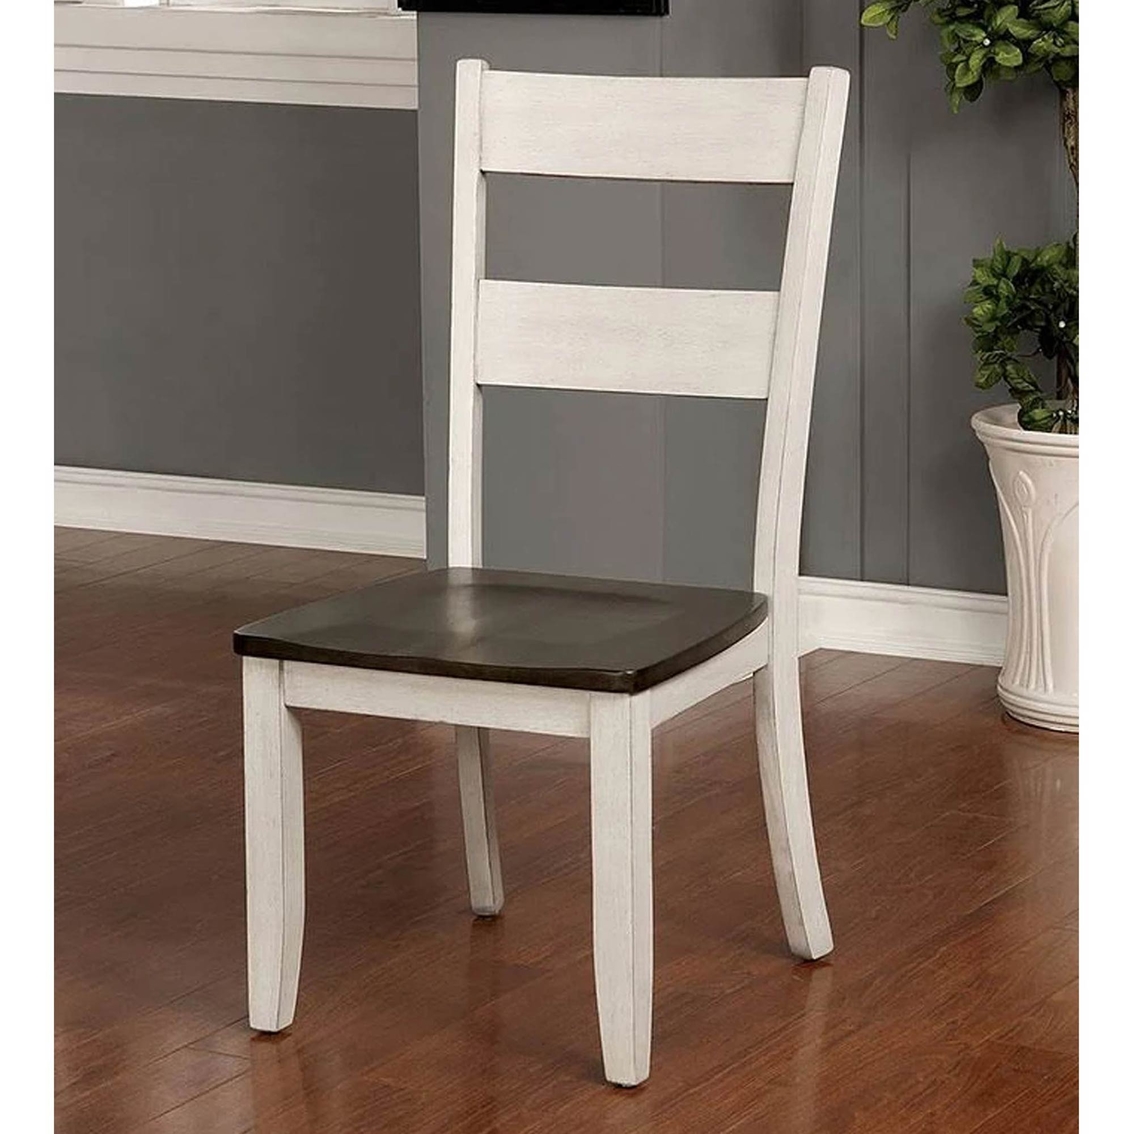 Furniture of America Juniper Side Chair - Image 2 of 2